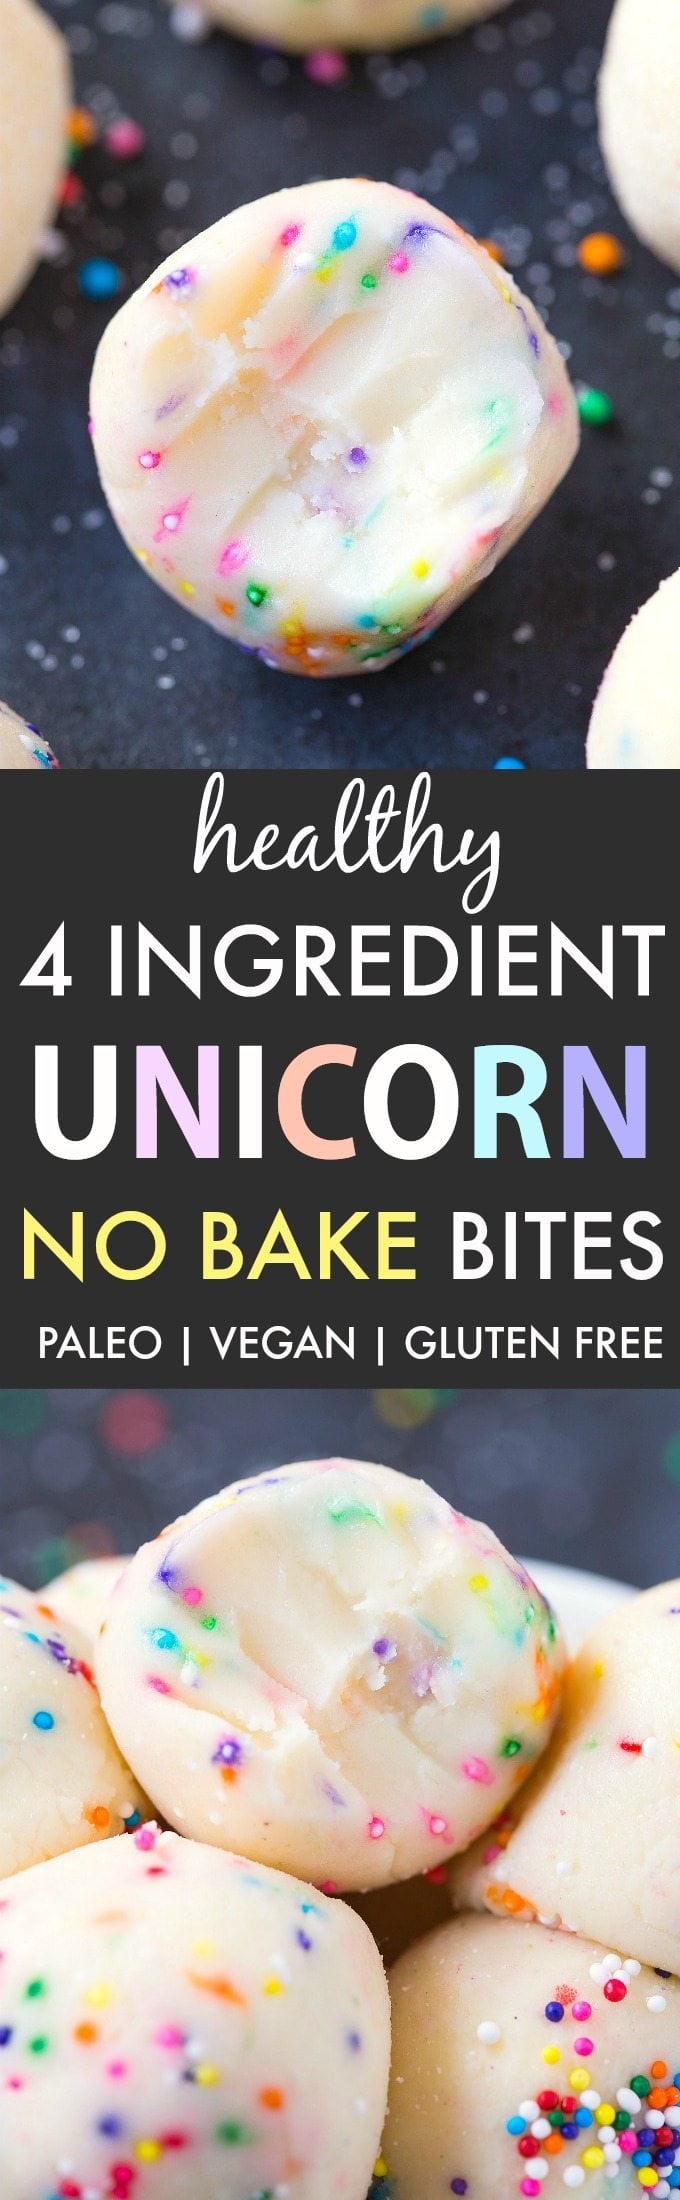 Healthy No Bake Unicorn Bites (V, GF, DF, P)- 4-Ingredient no bake bites inspired by the unicorn frappuccino- Ready in 5 minutes! {vegan, gluten free, paleo recipe}- thebigmansworld.com